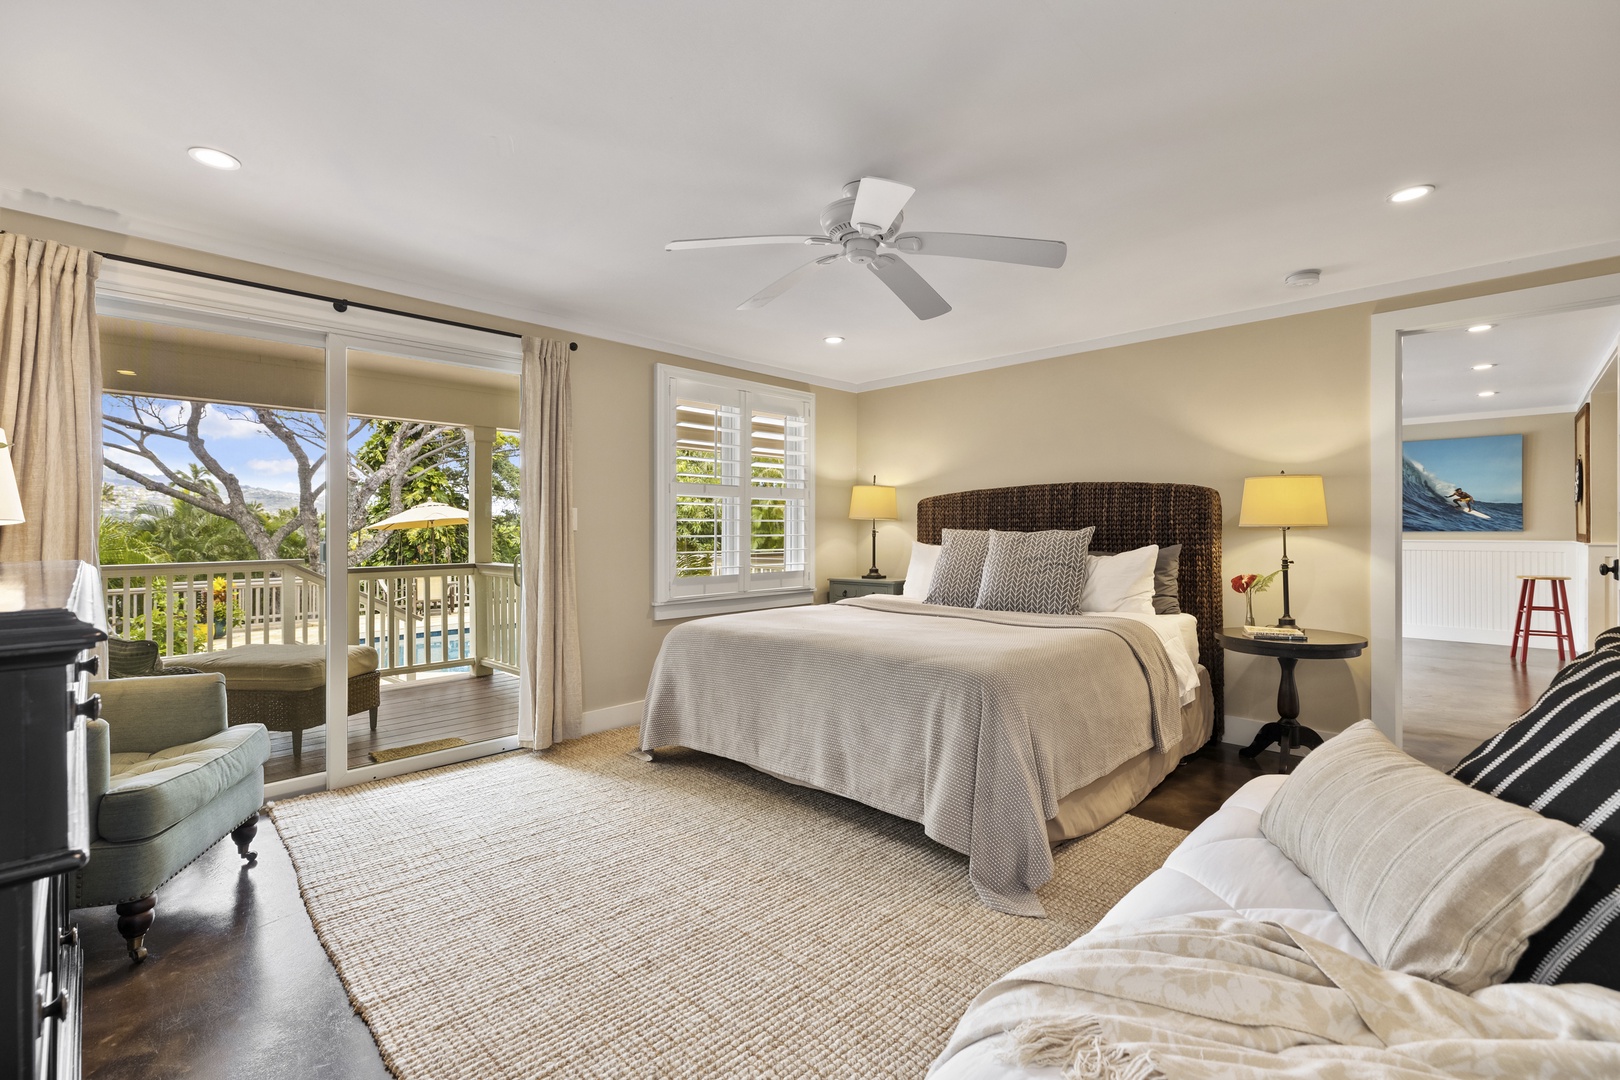 Honolulu Vacation Rentals, Hale Le'ahi* - Guest bedroom 2 with pool views